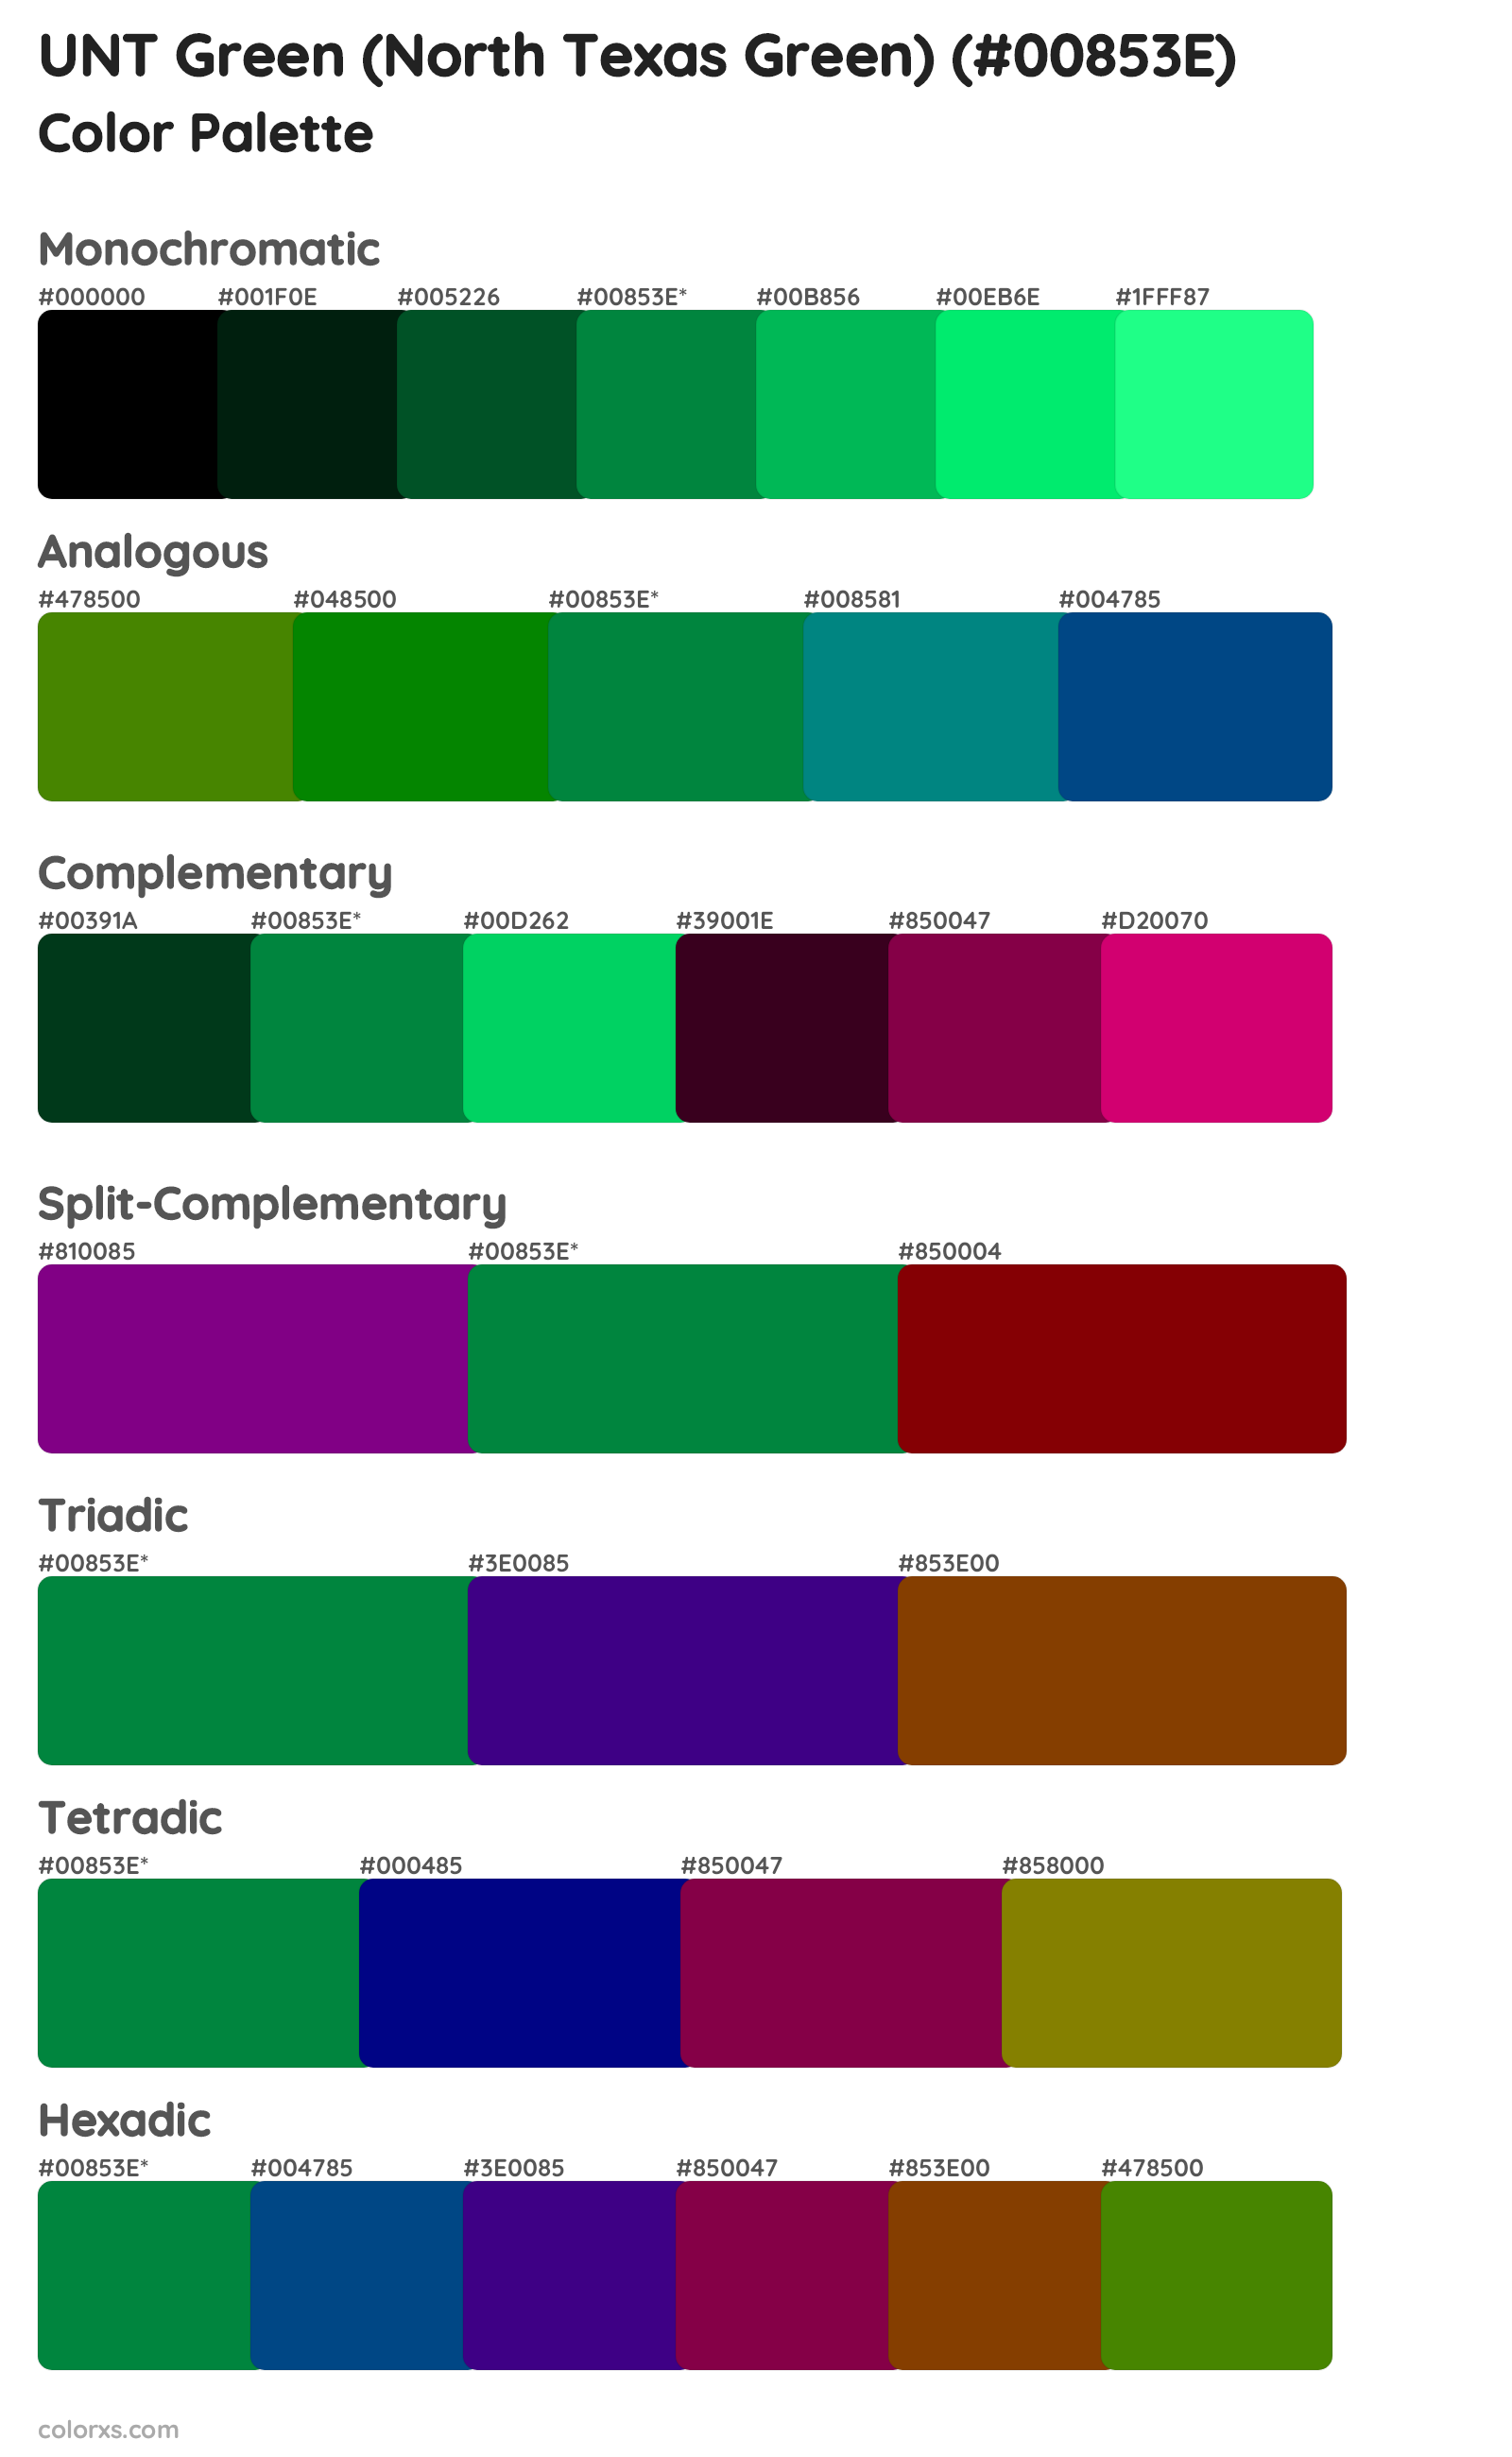 UNT Green (North Texas Green) Color Scheme Palettes